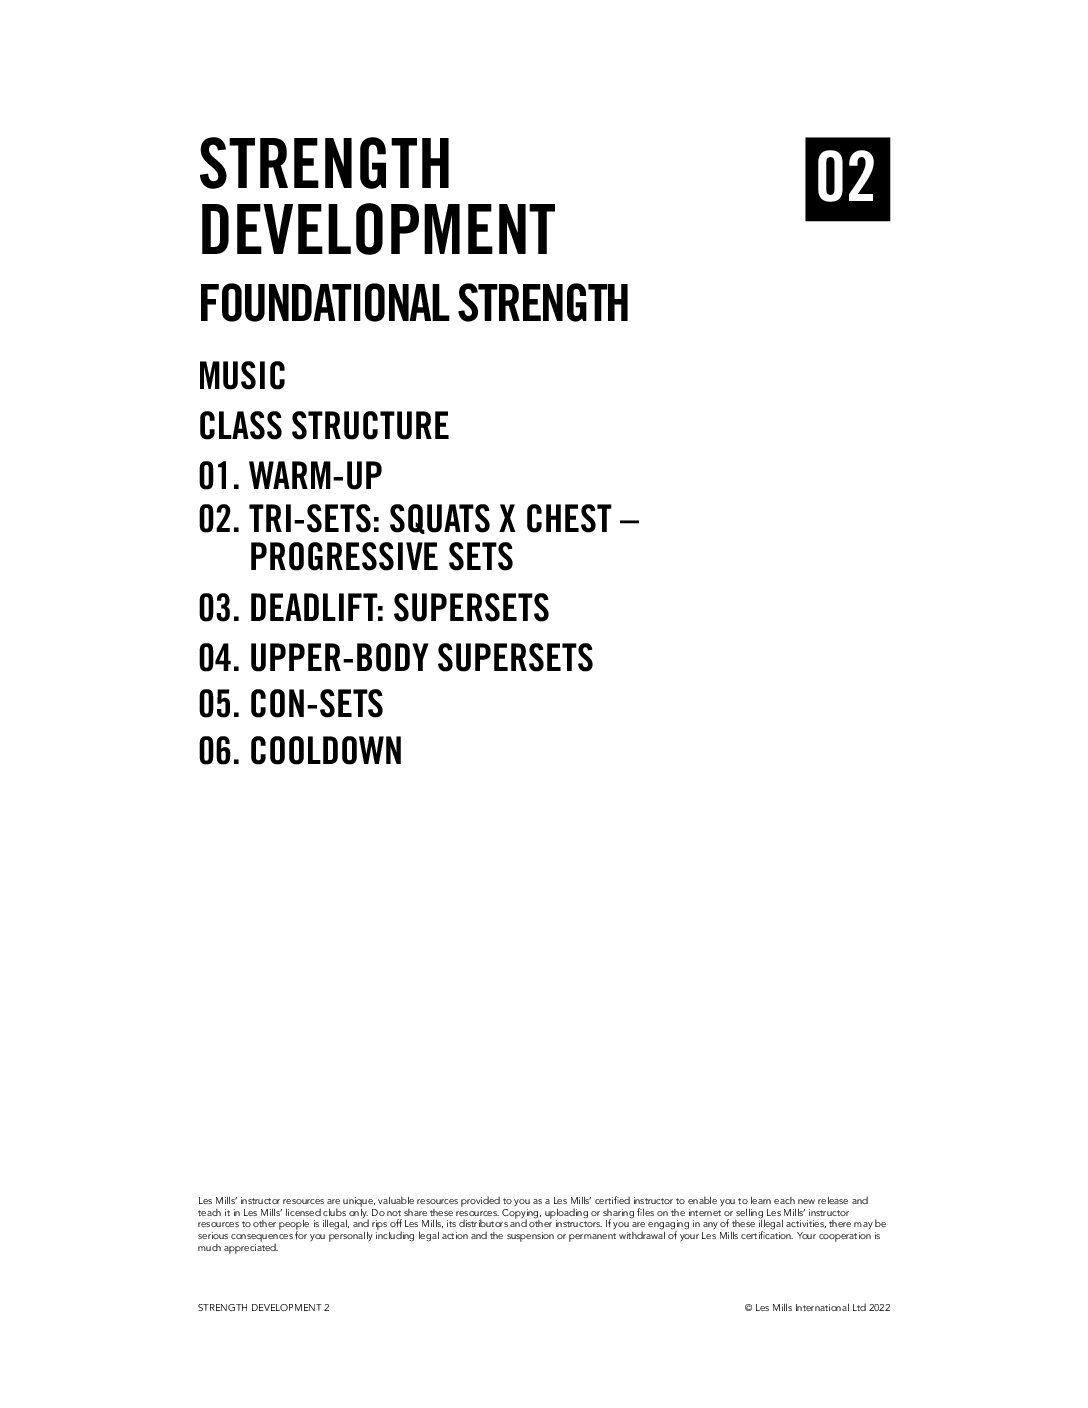 Strength Development-02